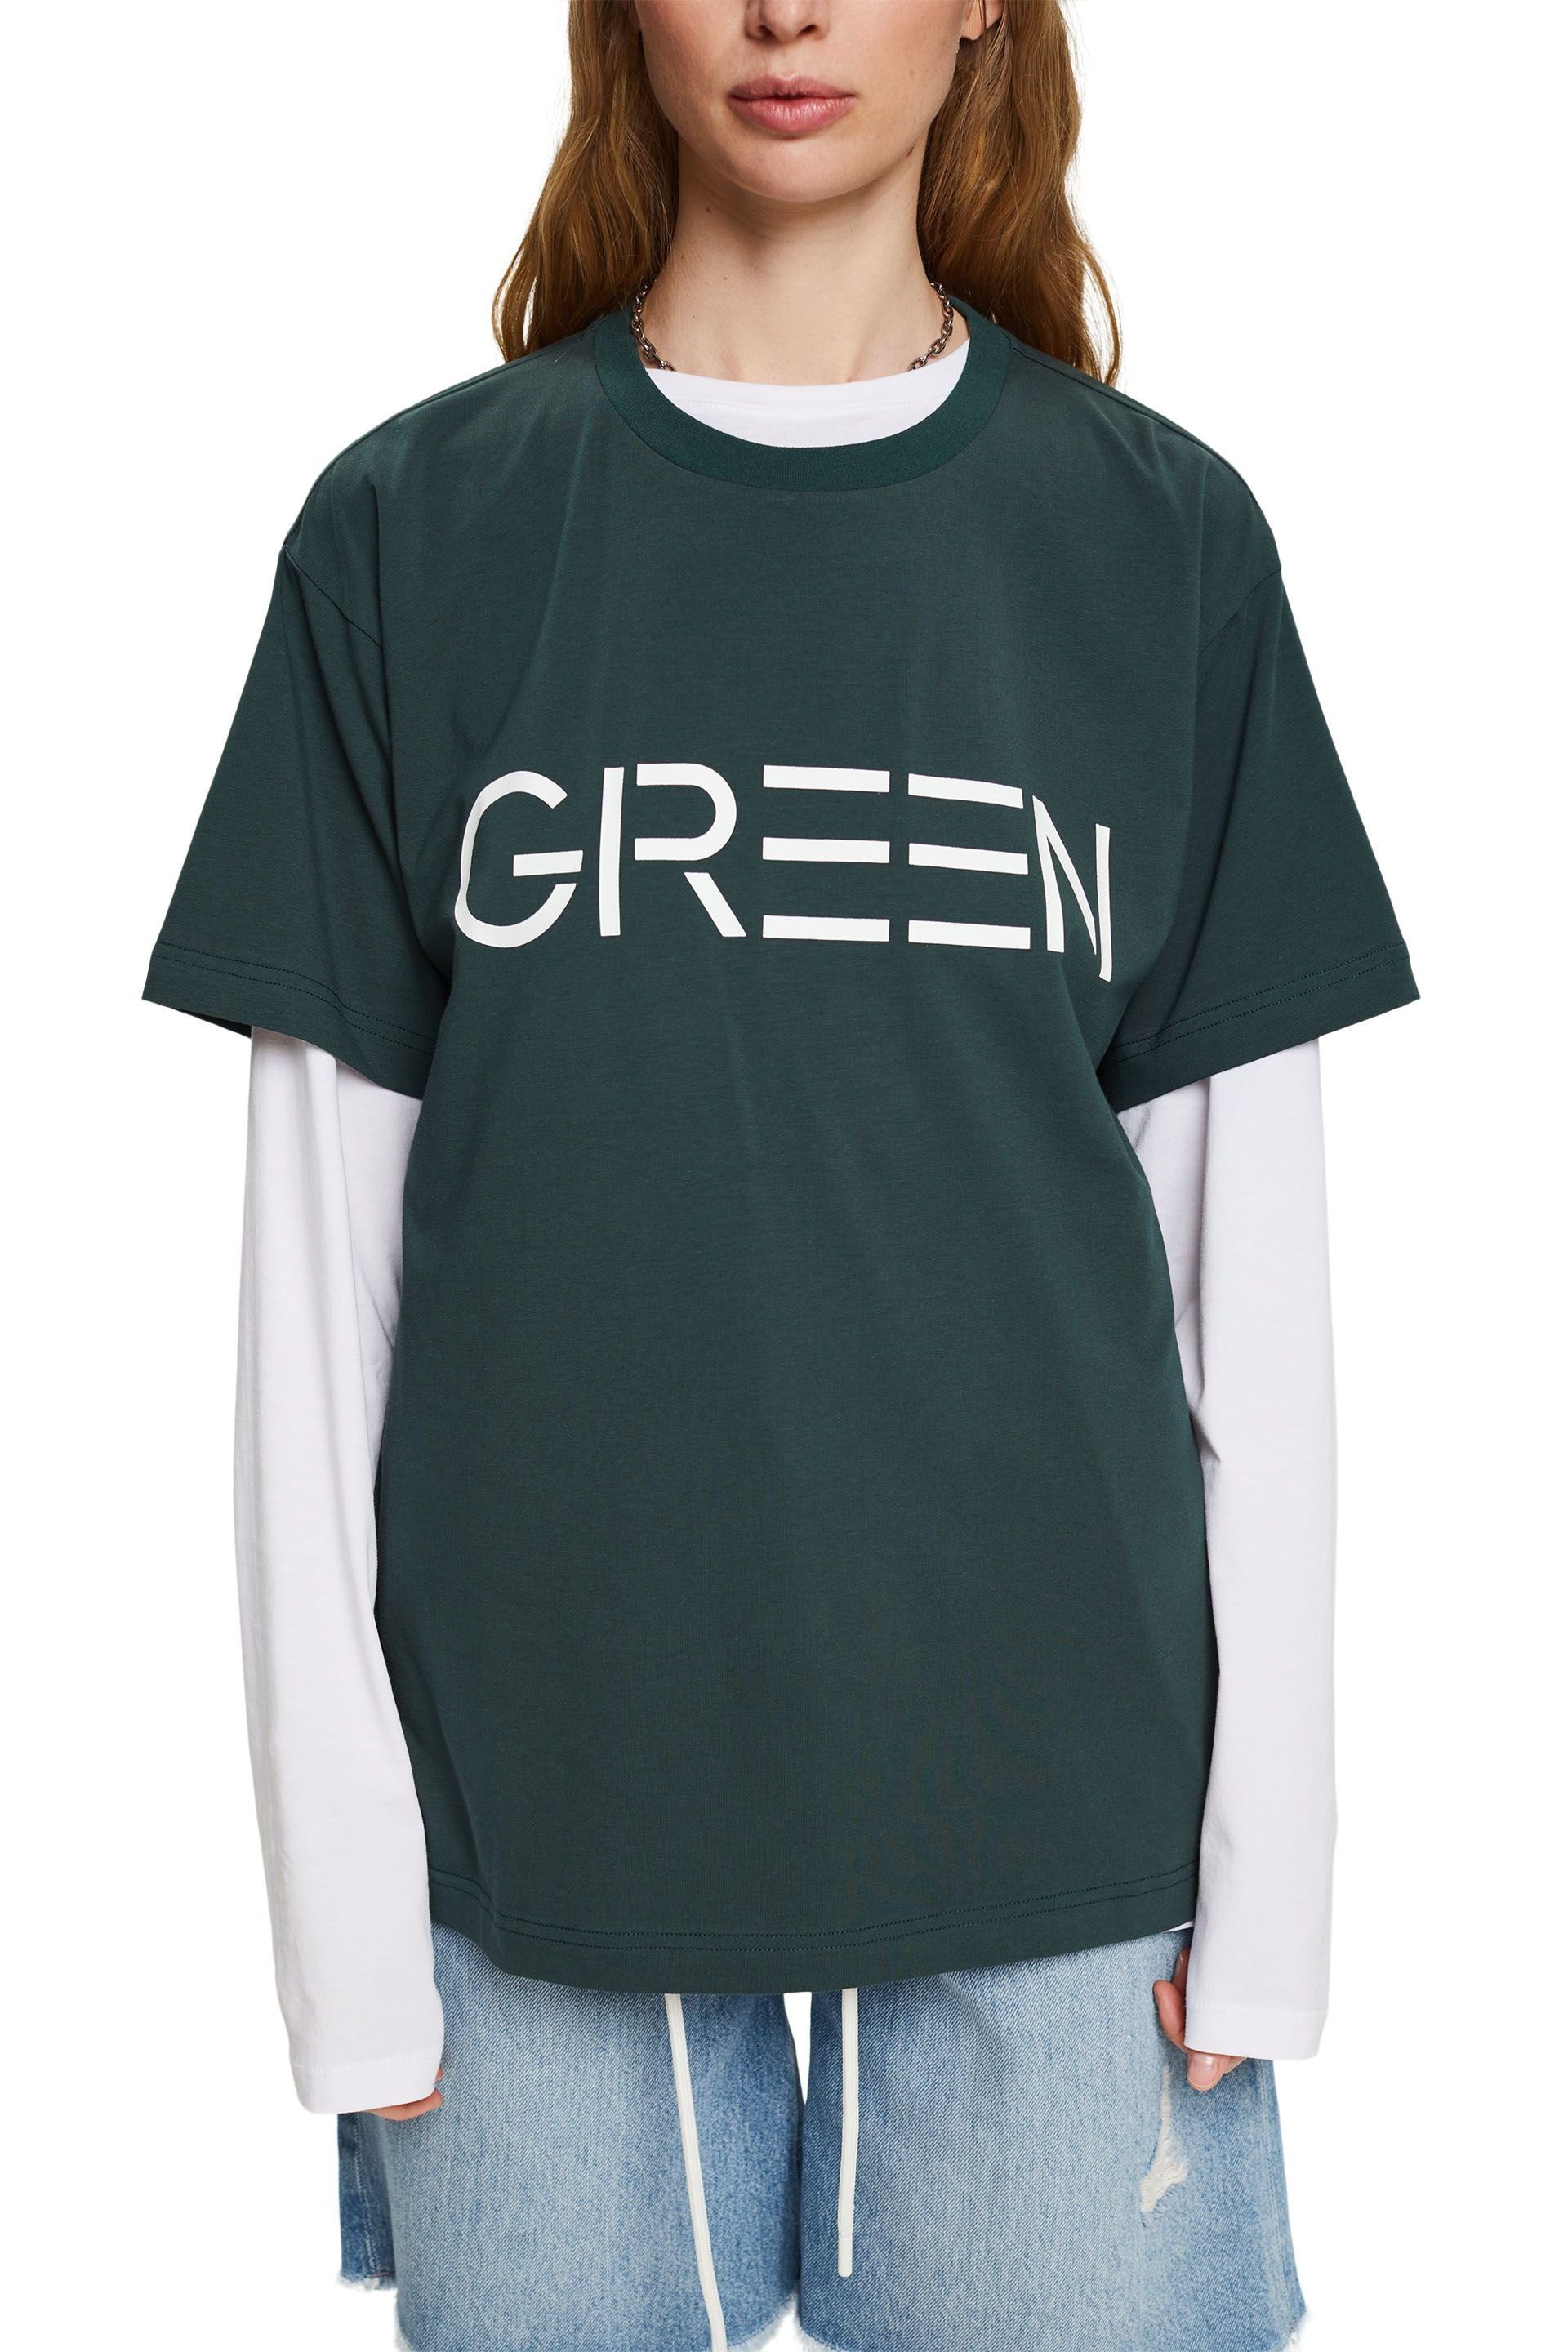 green dark T-Shirt Esprit